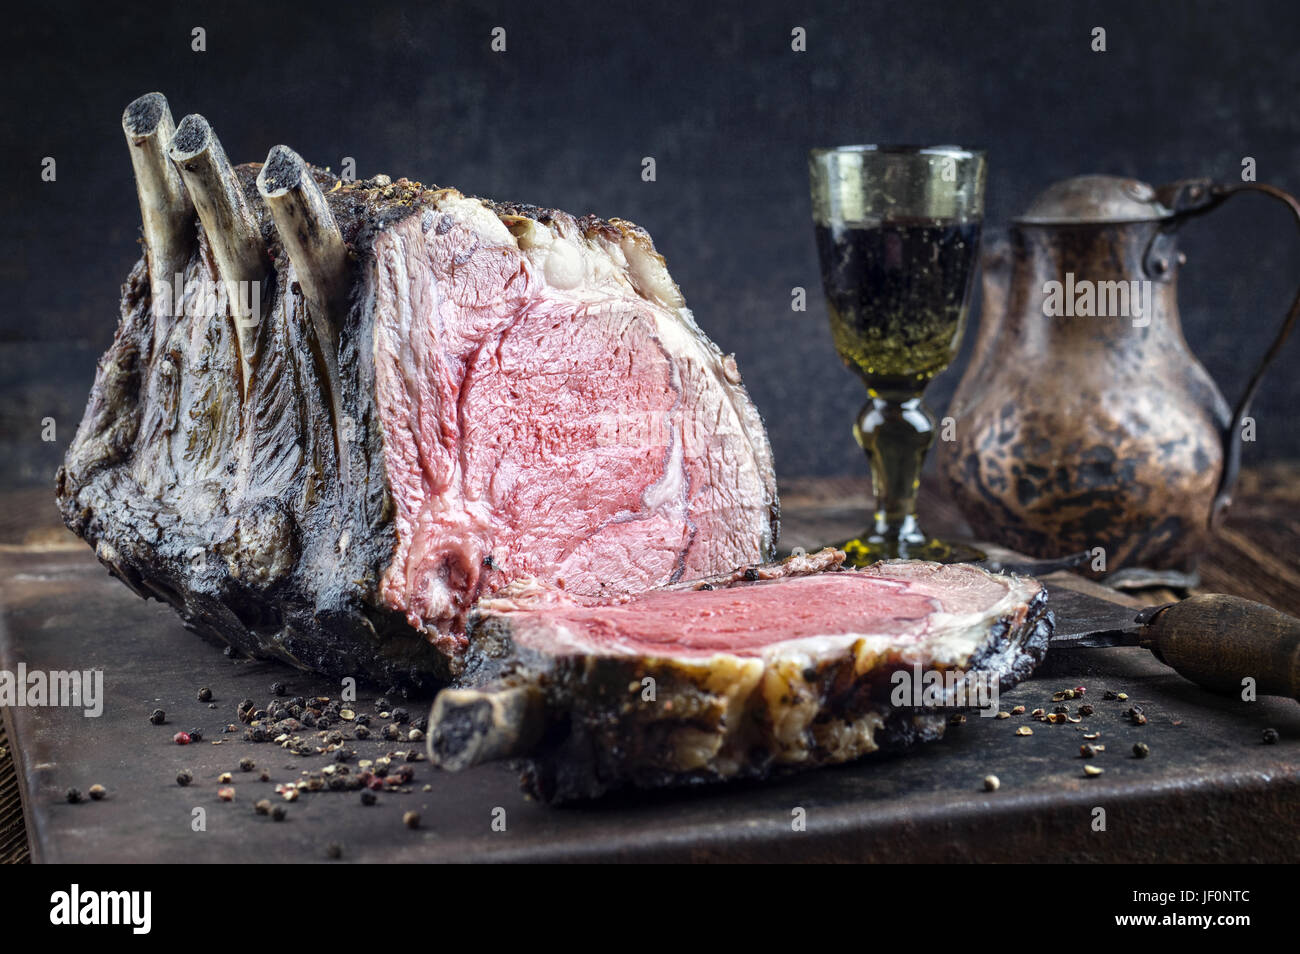 Dry Aged Barbecue Cote De Boeuf Stock Photo - Alamy